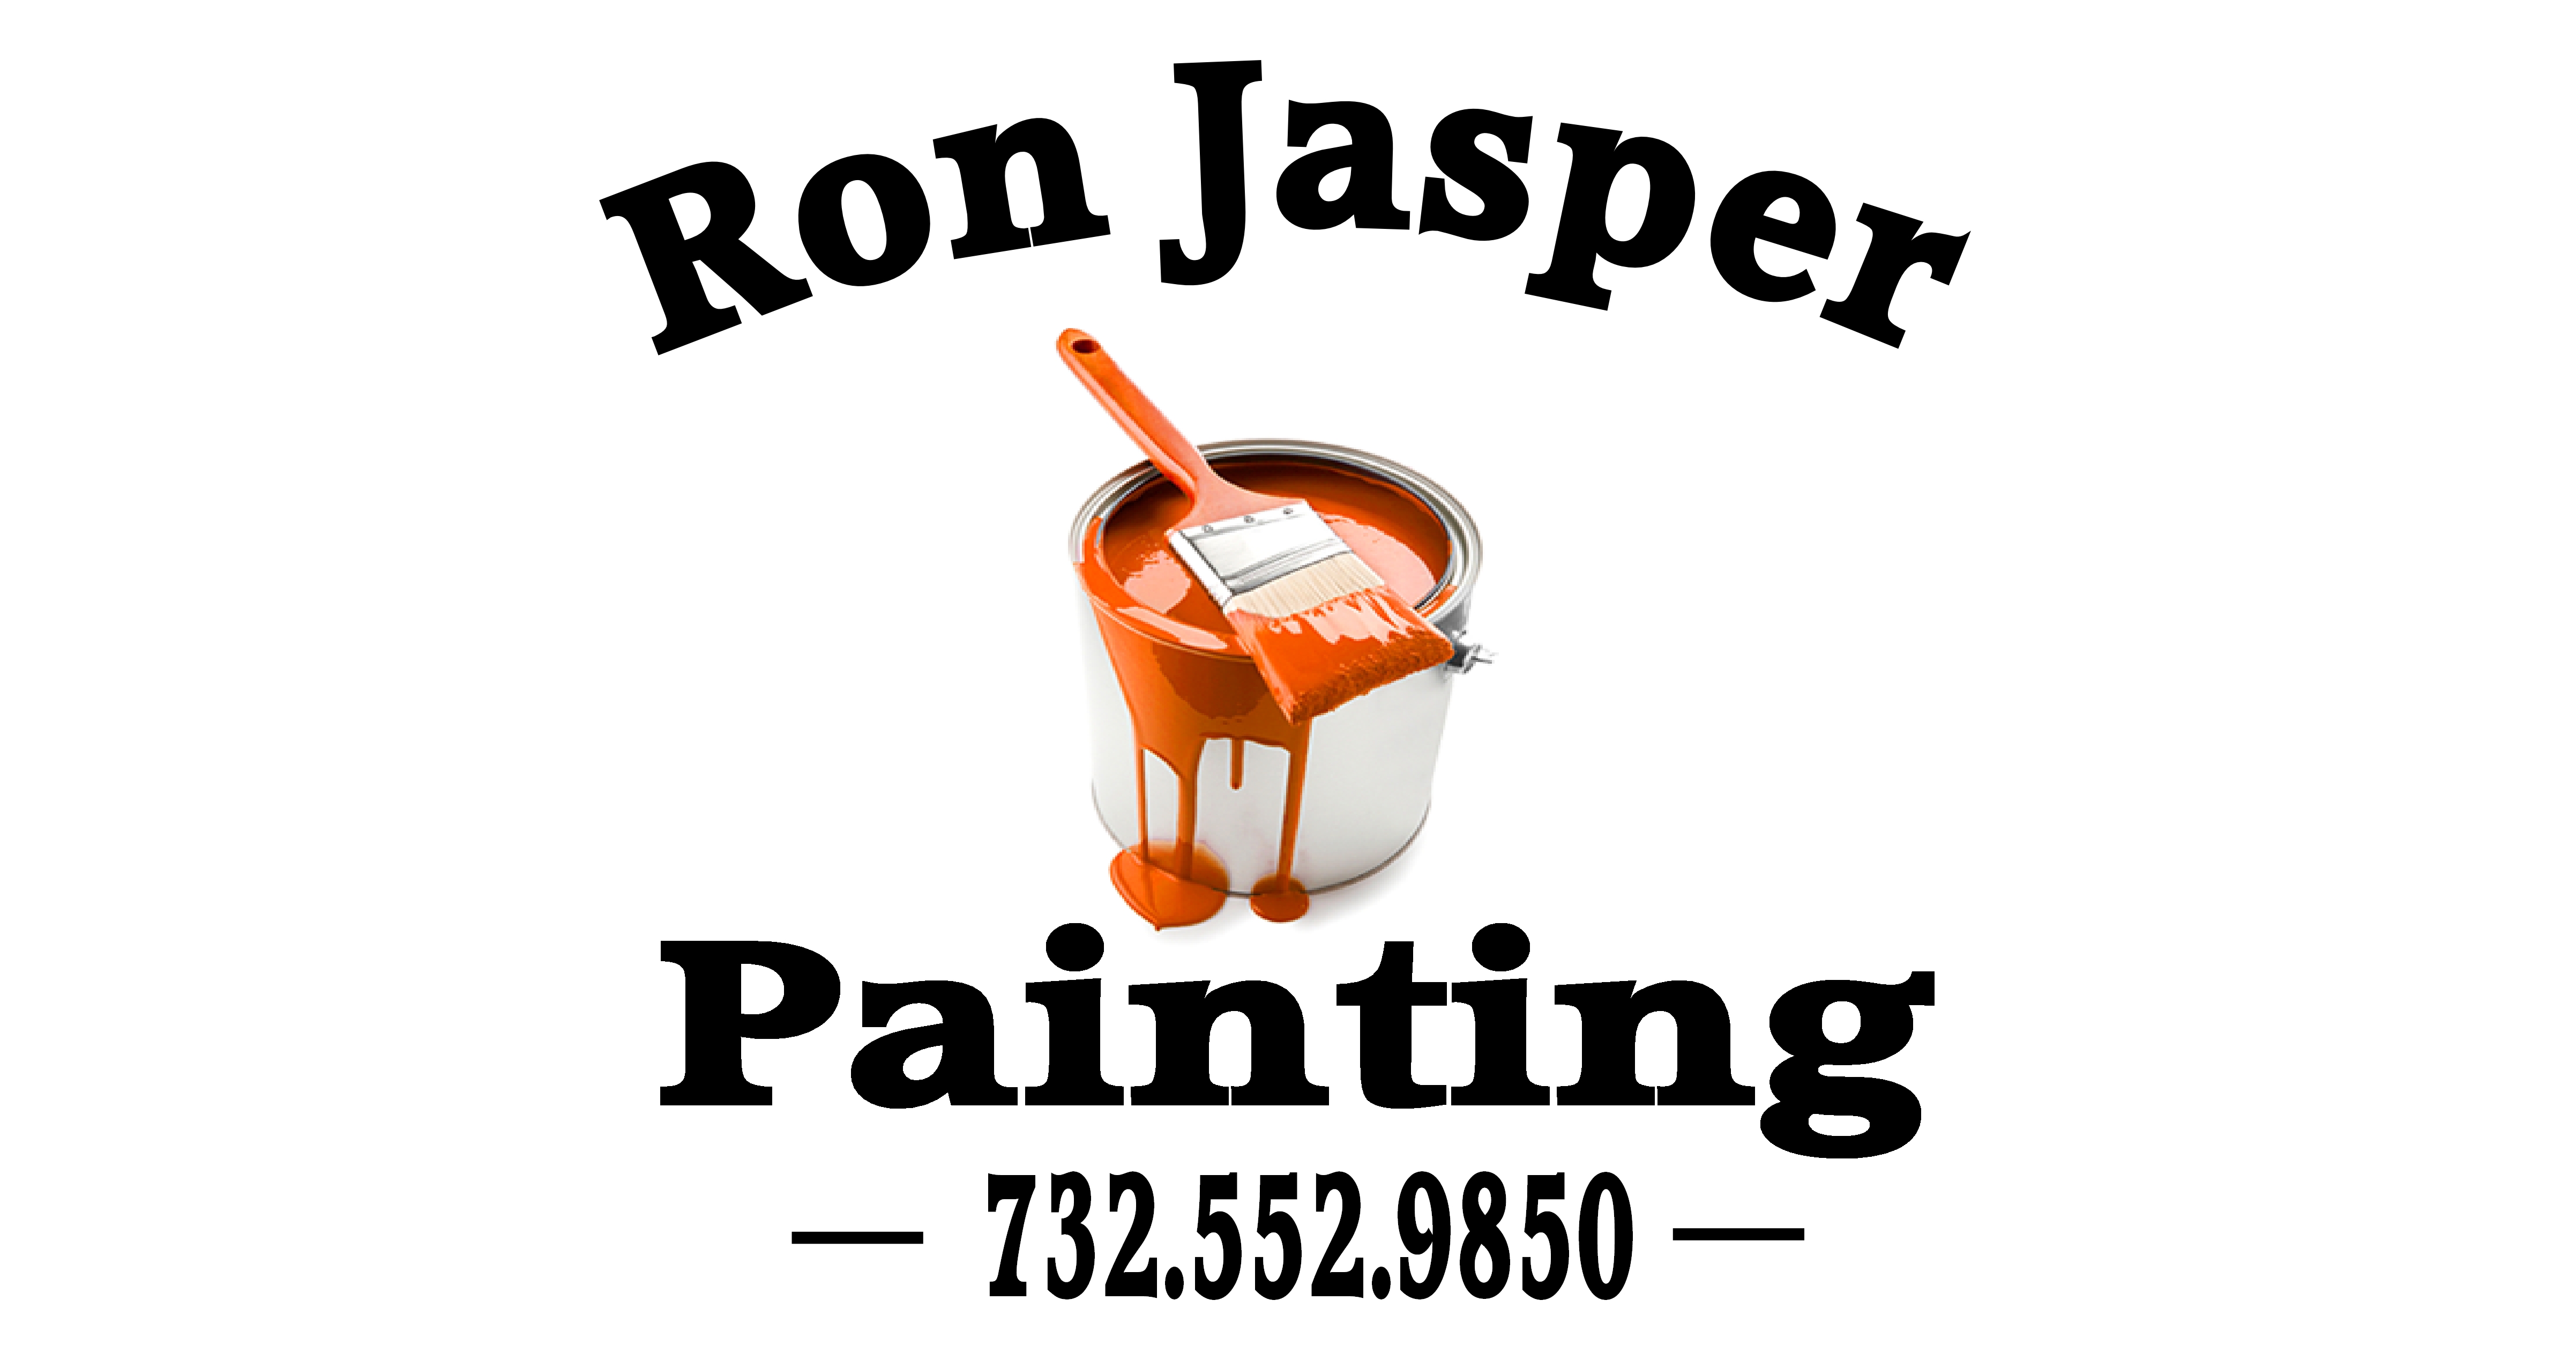 Ron Jasper Painting Logo